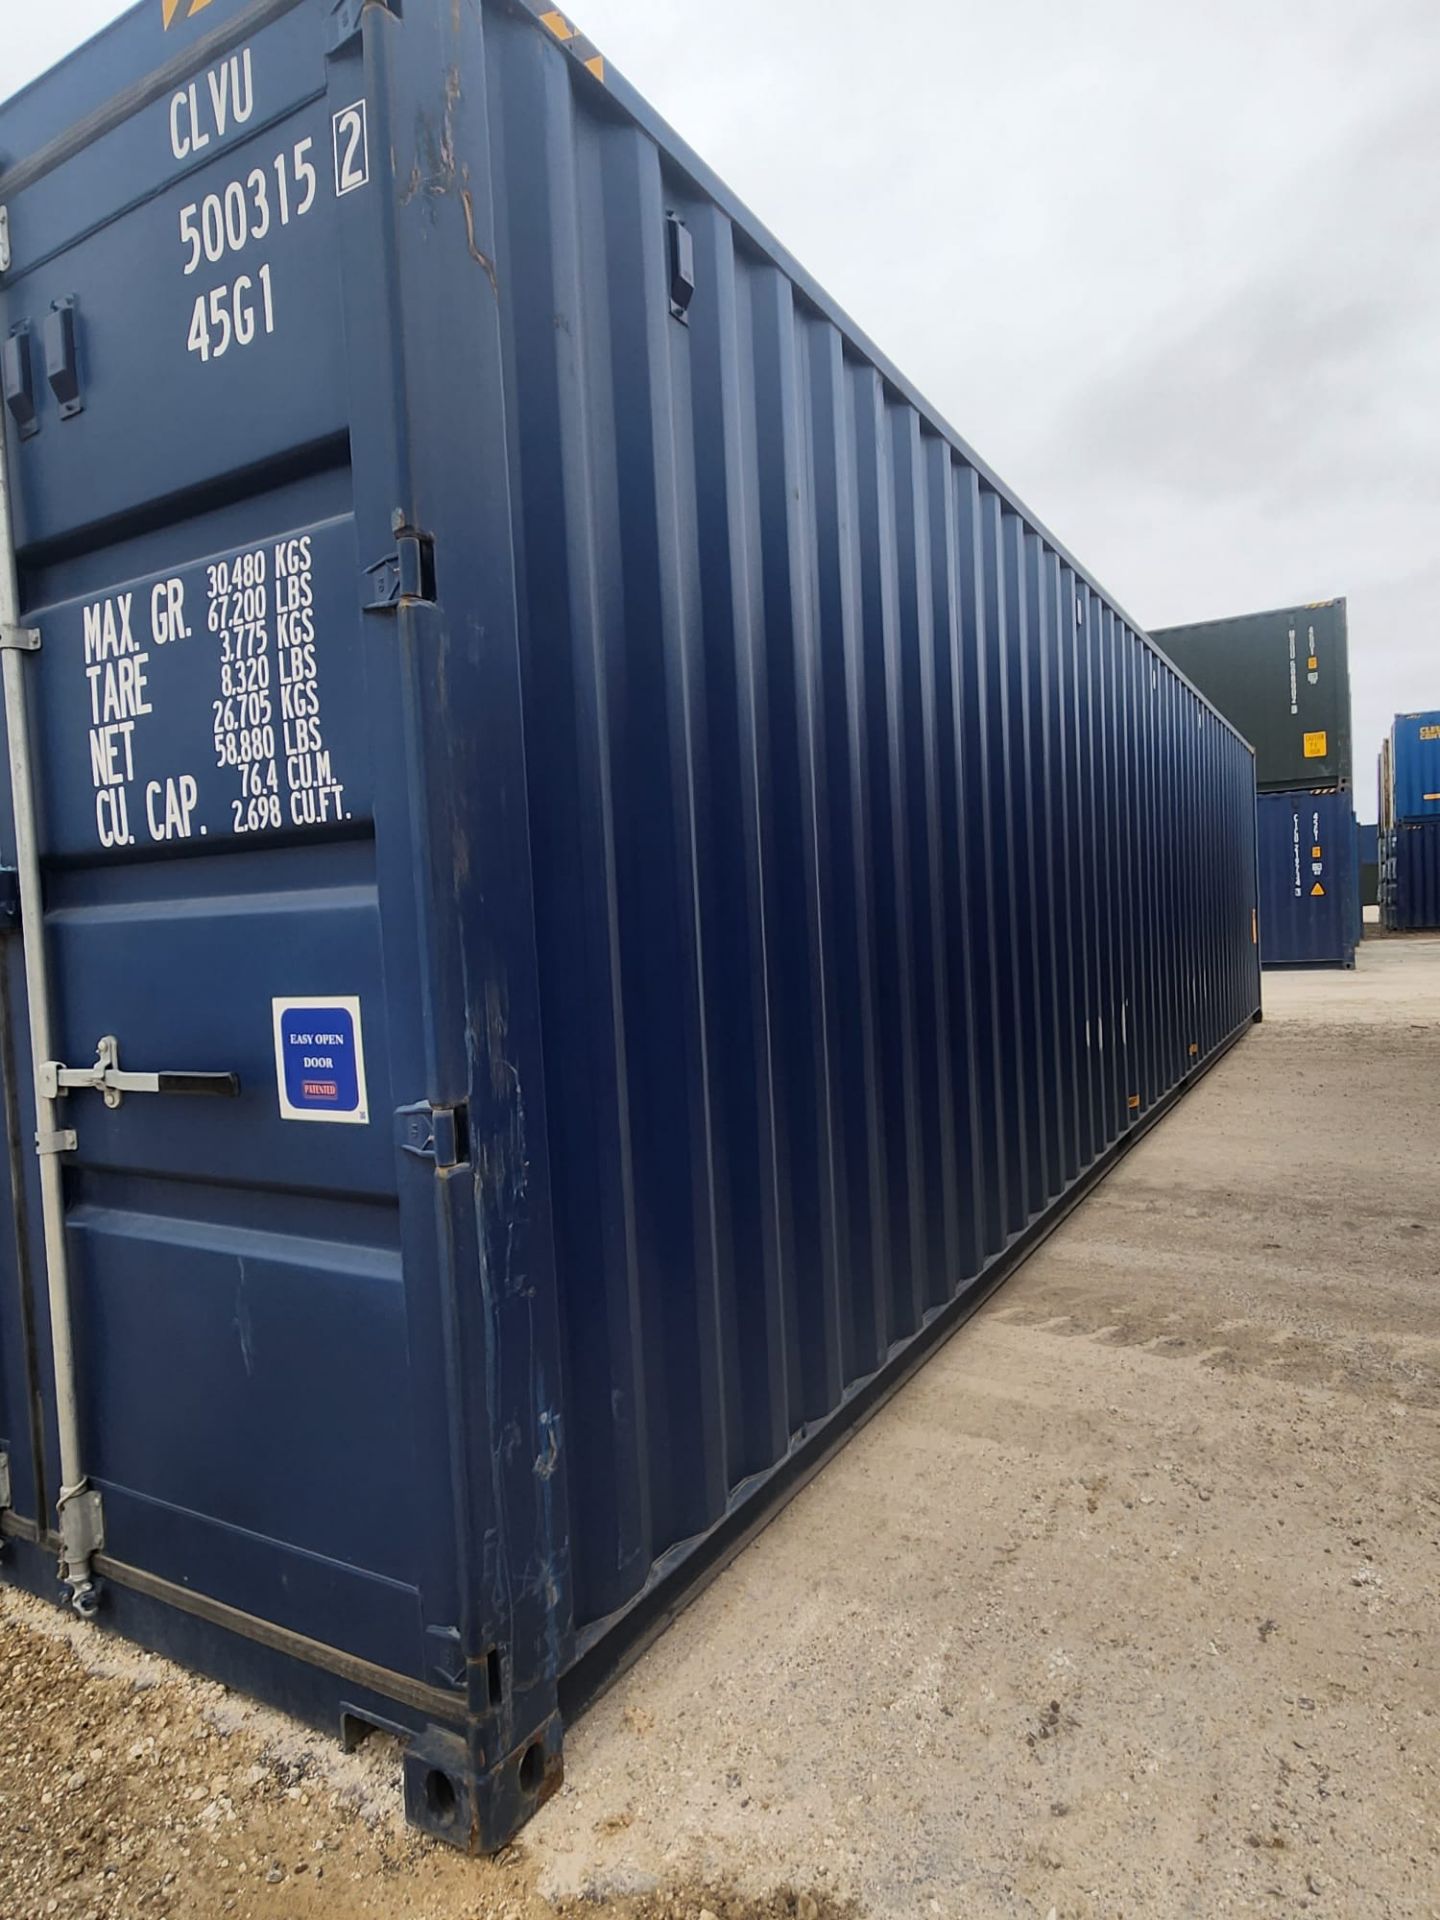 NO RESERVE - 40ft HC Shipping Container - ref CLVU5003152 - Bild 5 aus 7